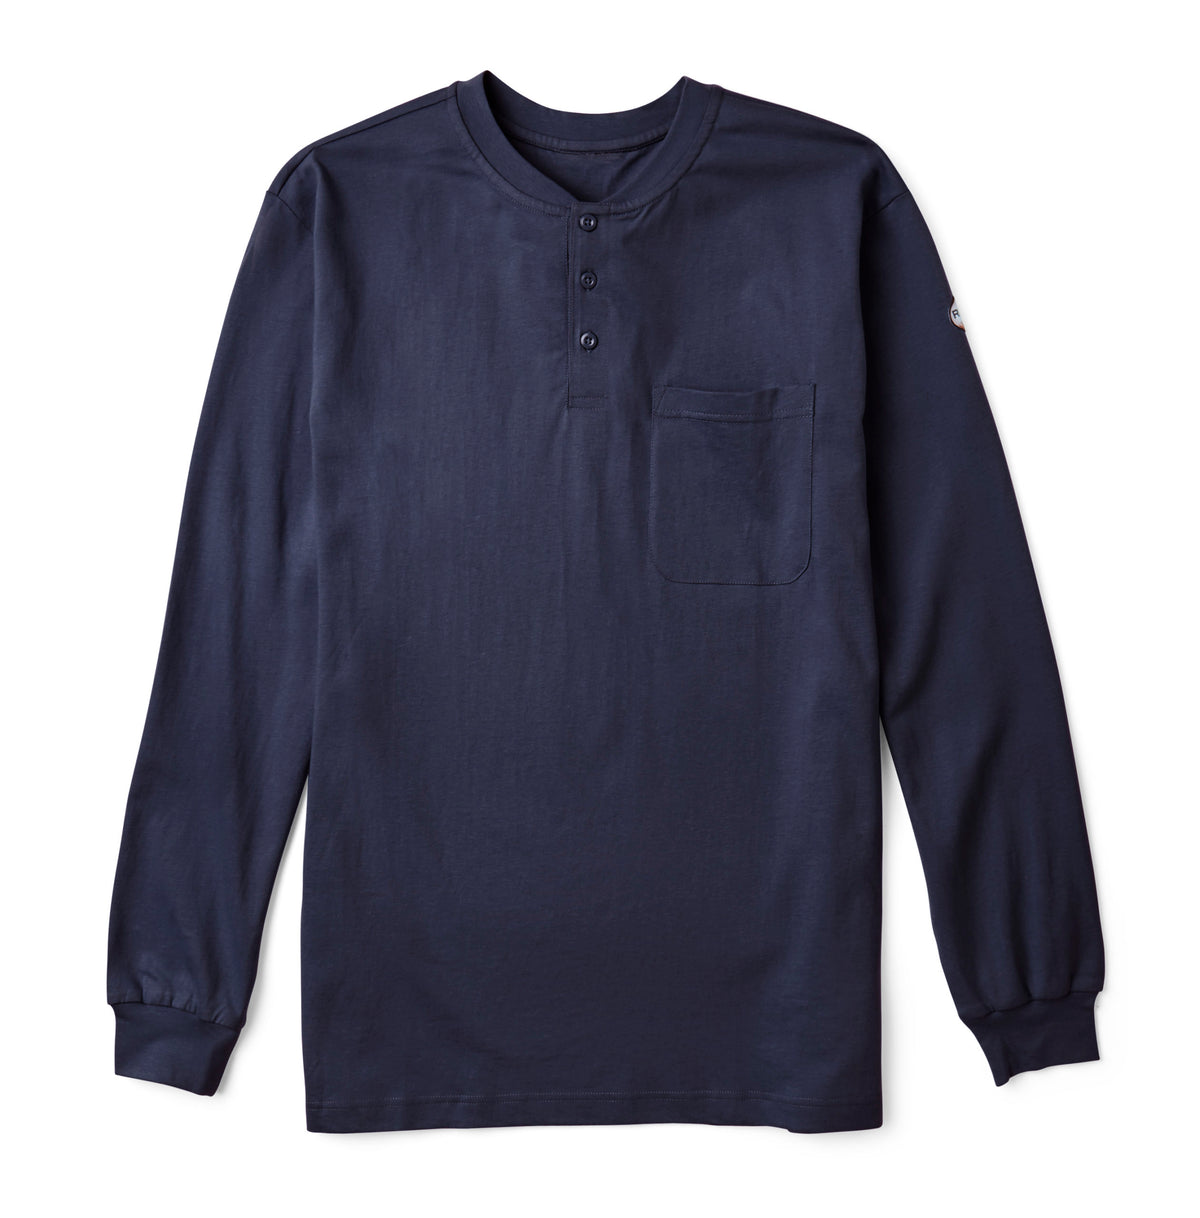 Rasco FR Clothing Sizing Chart for Men and Women – Fire Retardant Shirts.com